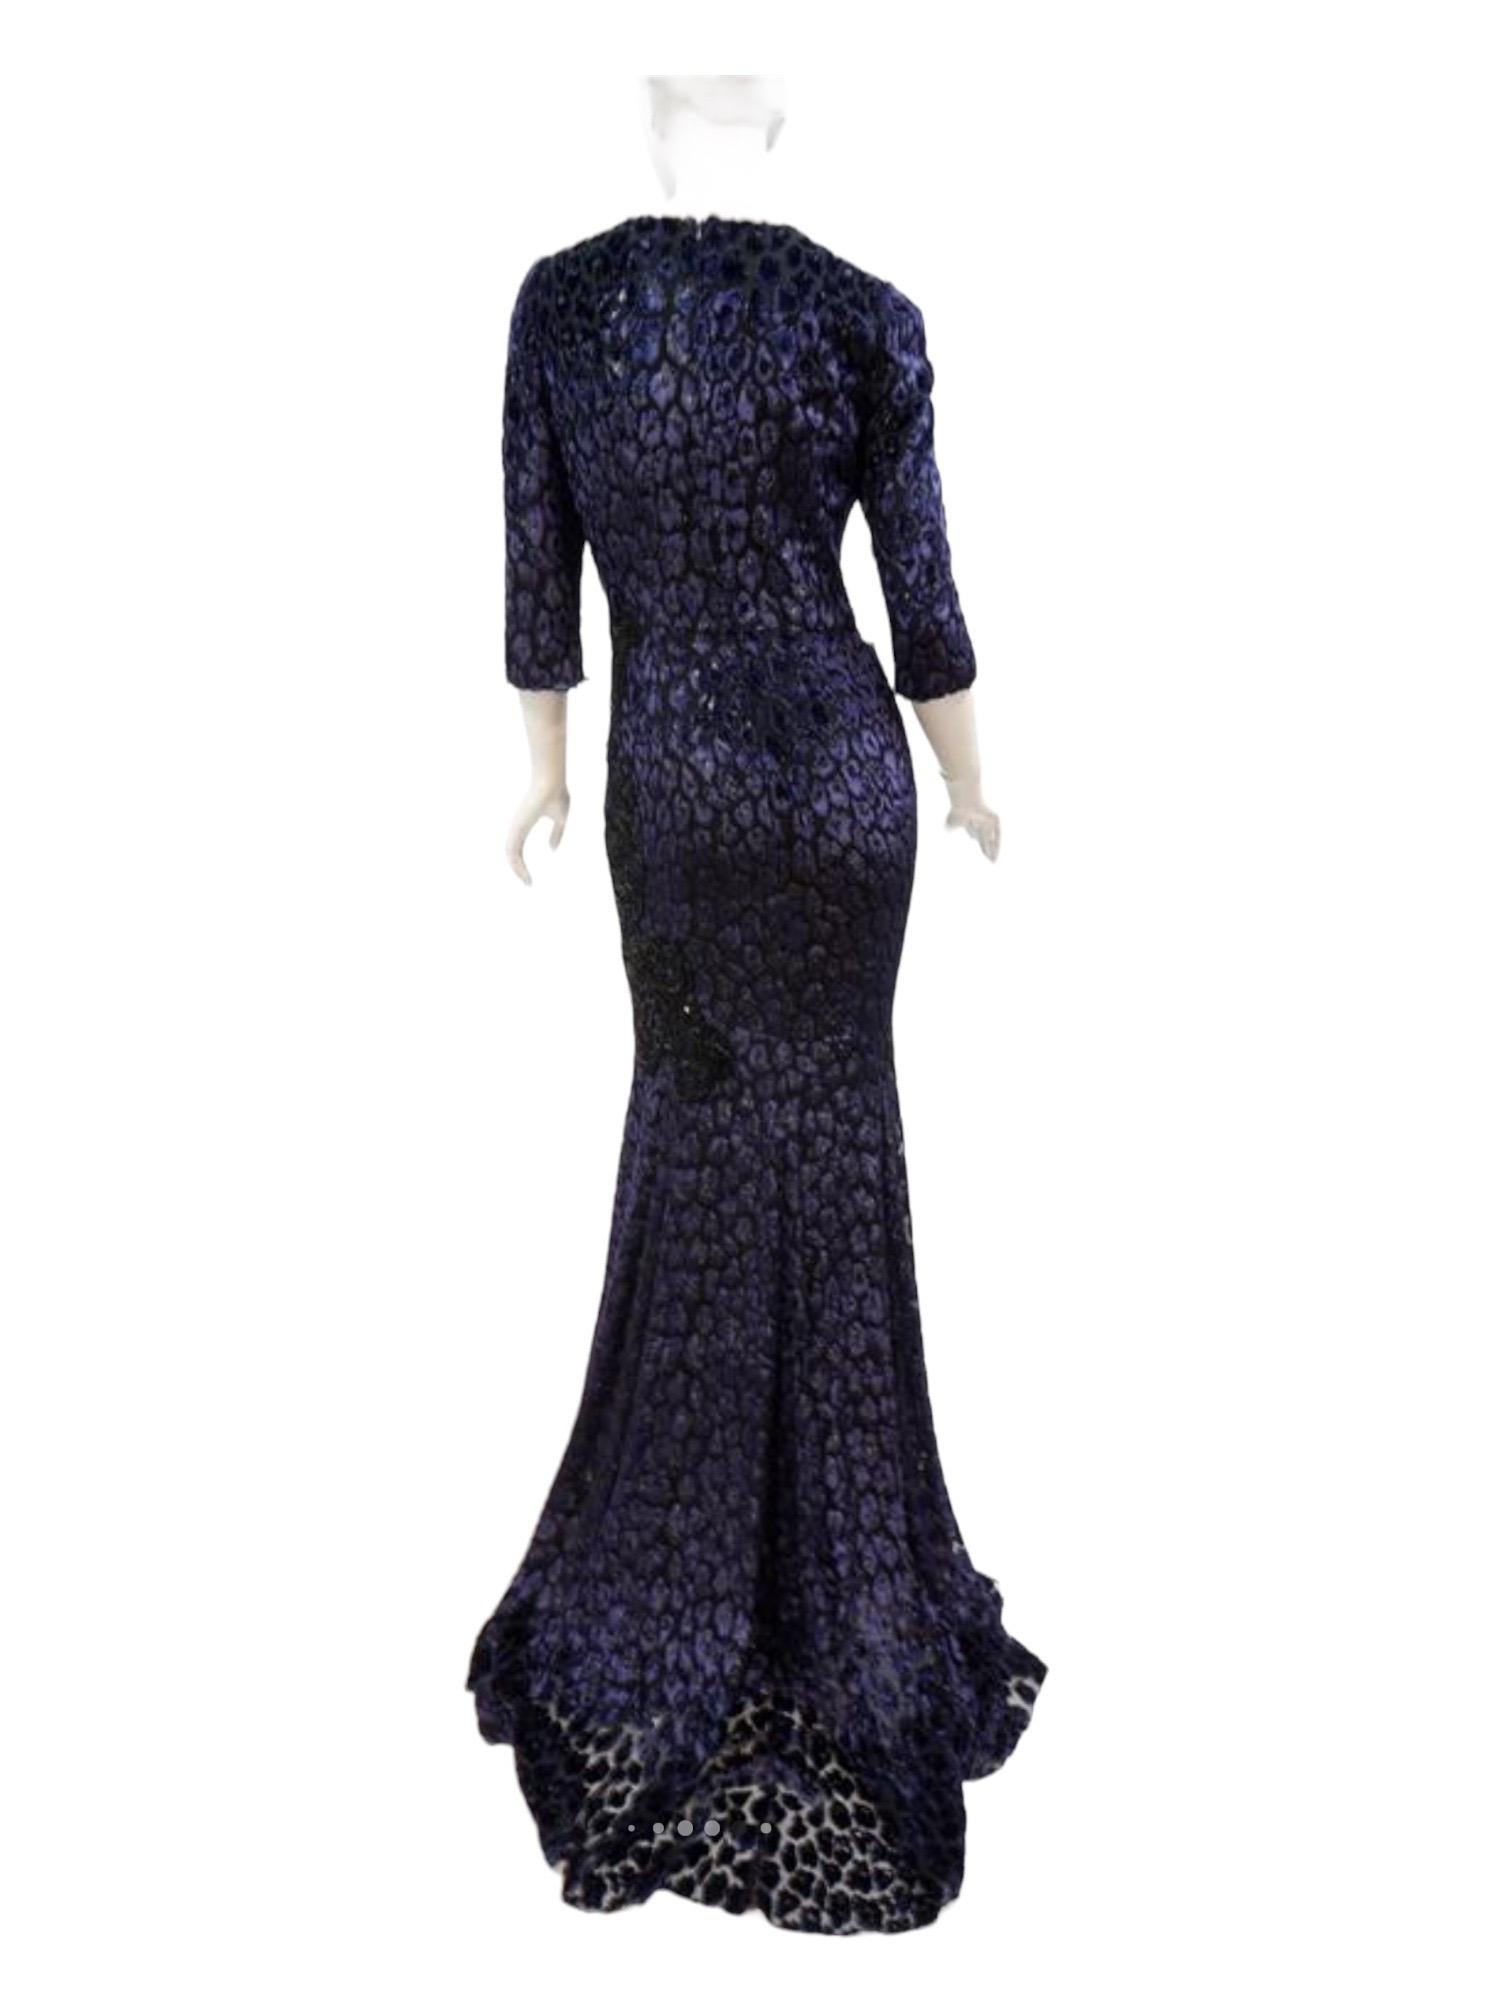 Andrew Gn Embellished Midnight Blue Leopard Print Devore Velvet Dress Gown Fr 38 2